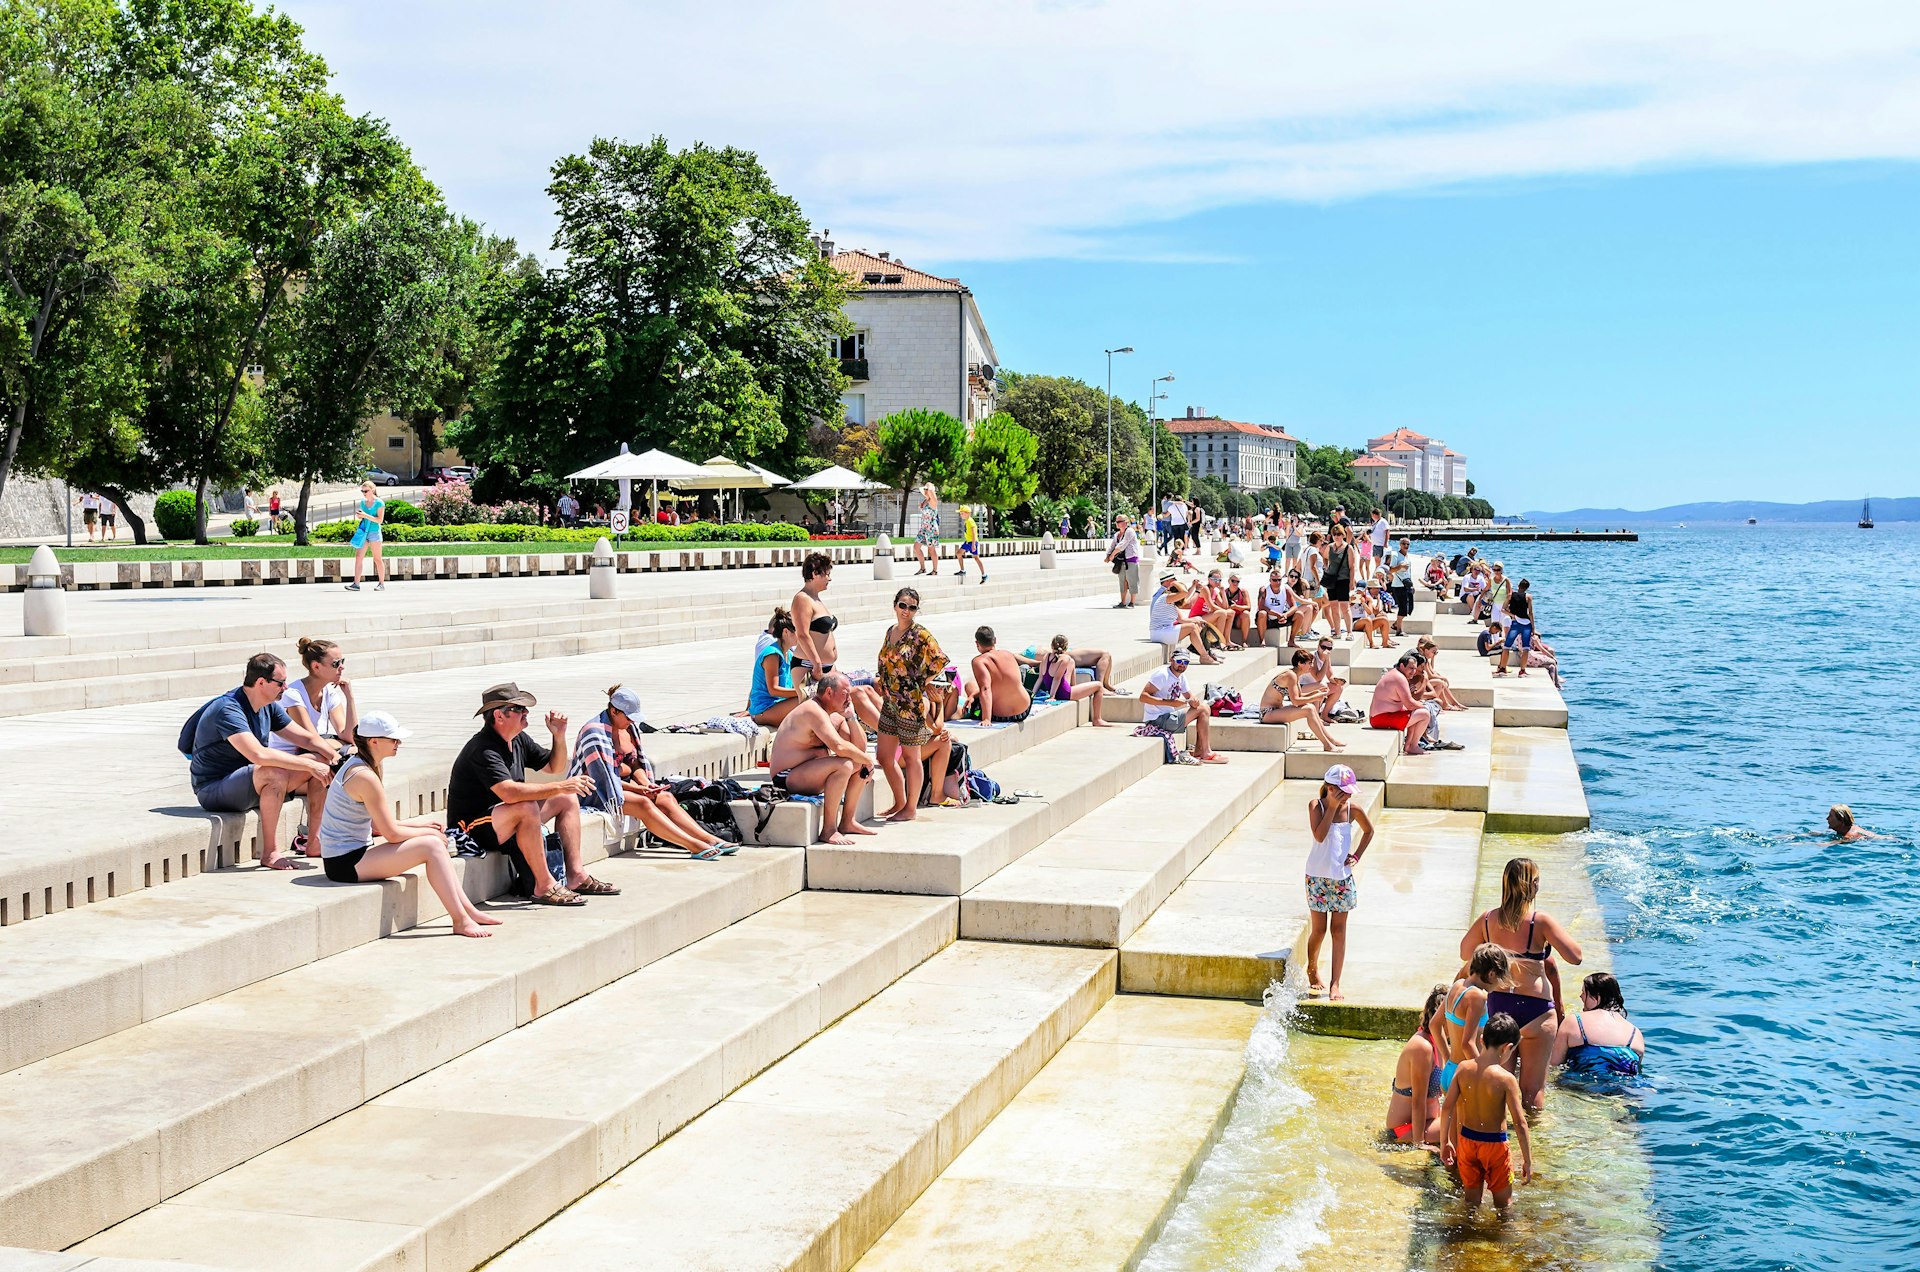 People sitting on the steps near the sea organ in Croatia